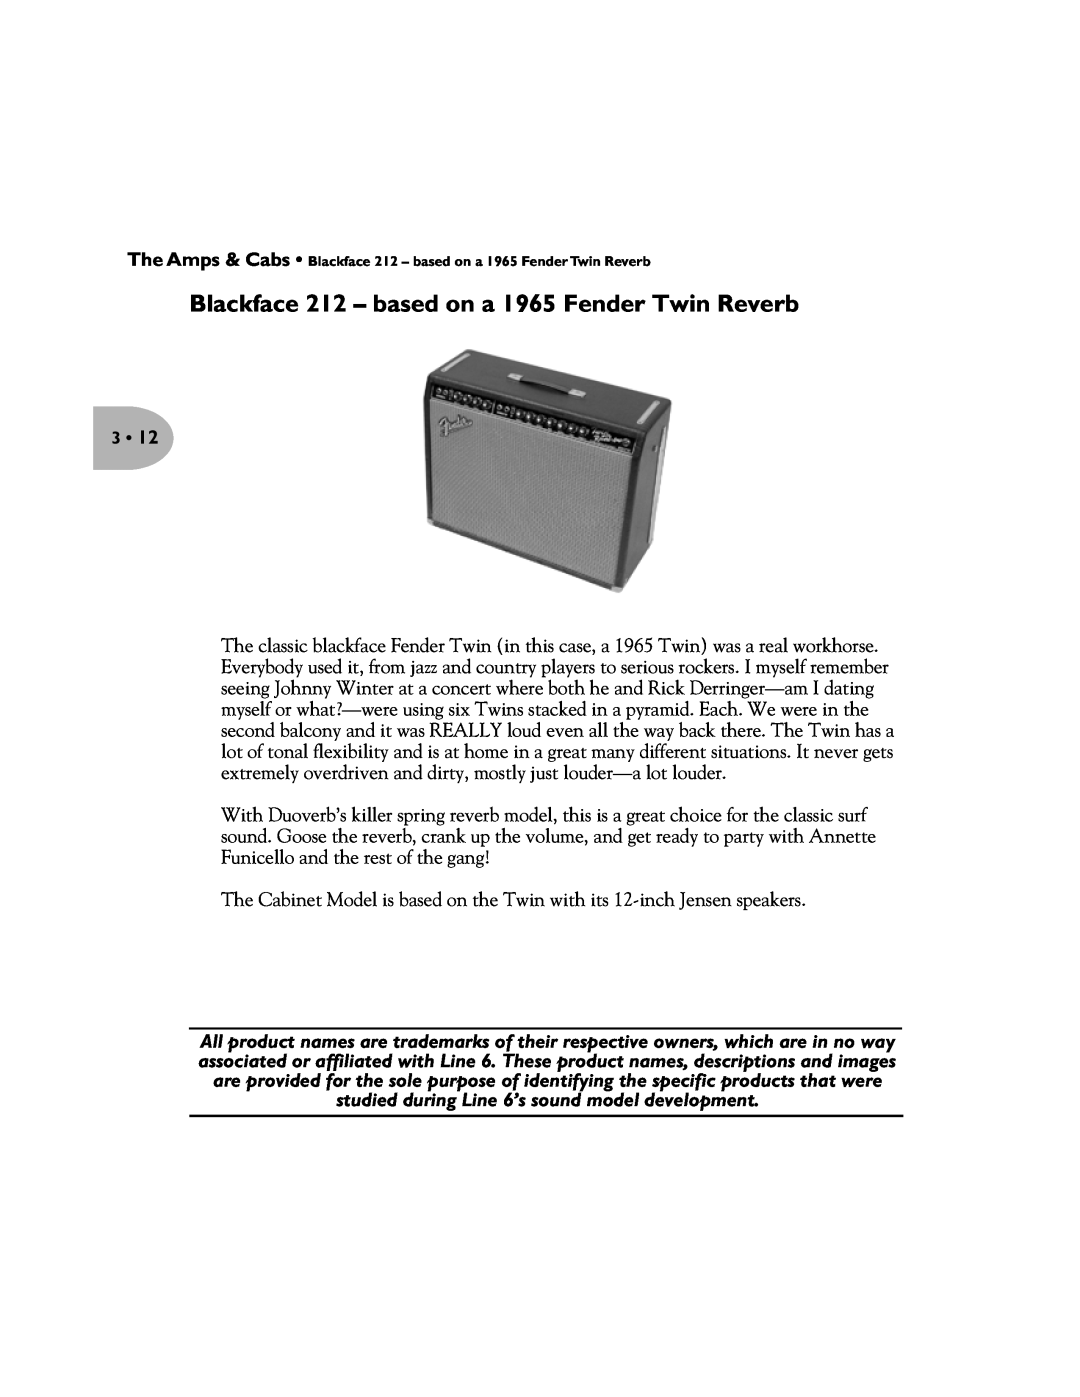 Line 6 Pilot's Handbook manual Blackface 212 - based on a 1965 Fender Twin Reverb 